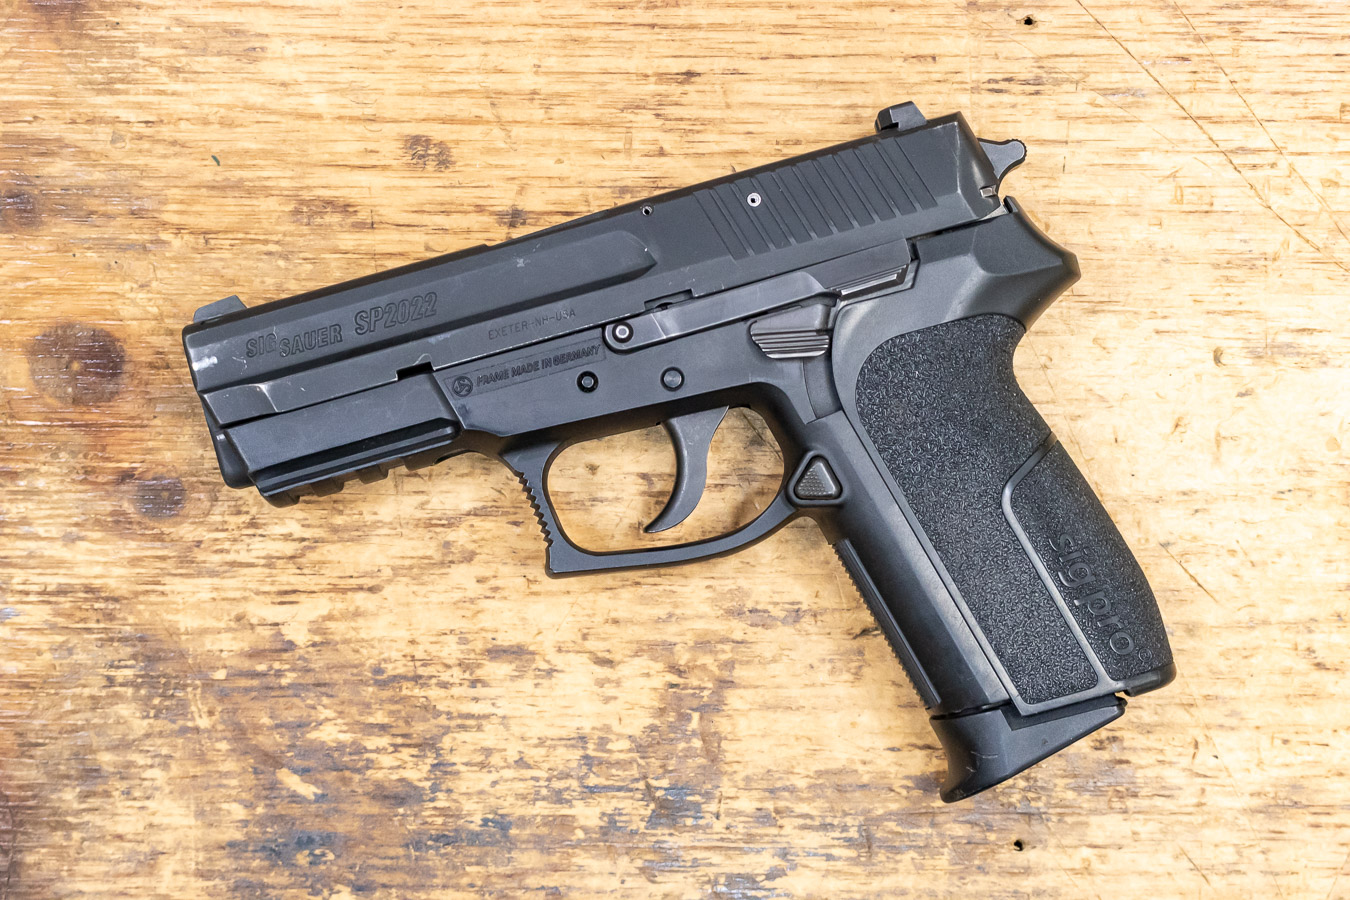  Sig  Sauer  SP2022  9mm Police  Trade in Pistol Sportsman s 